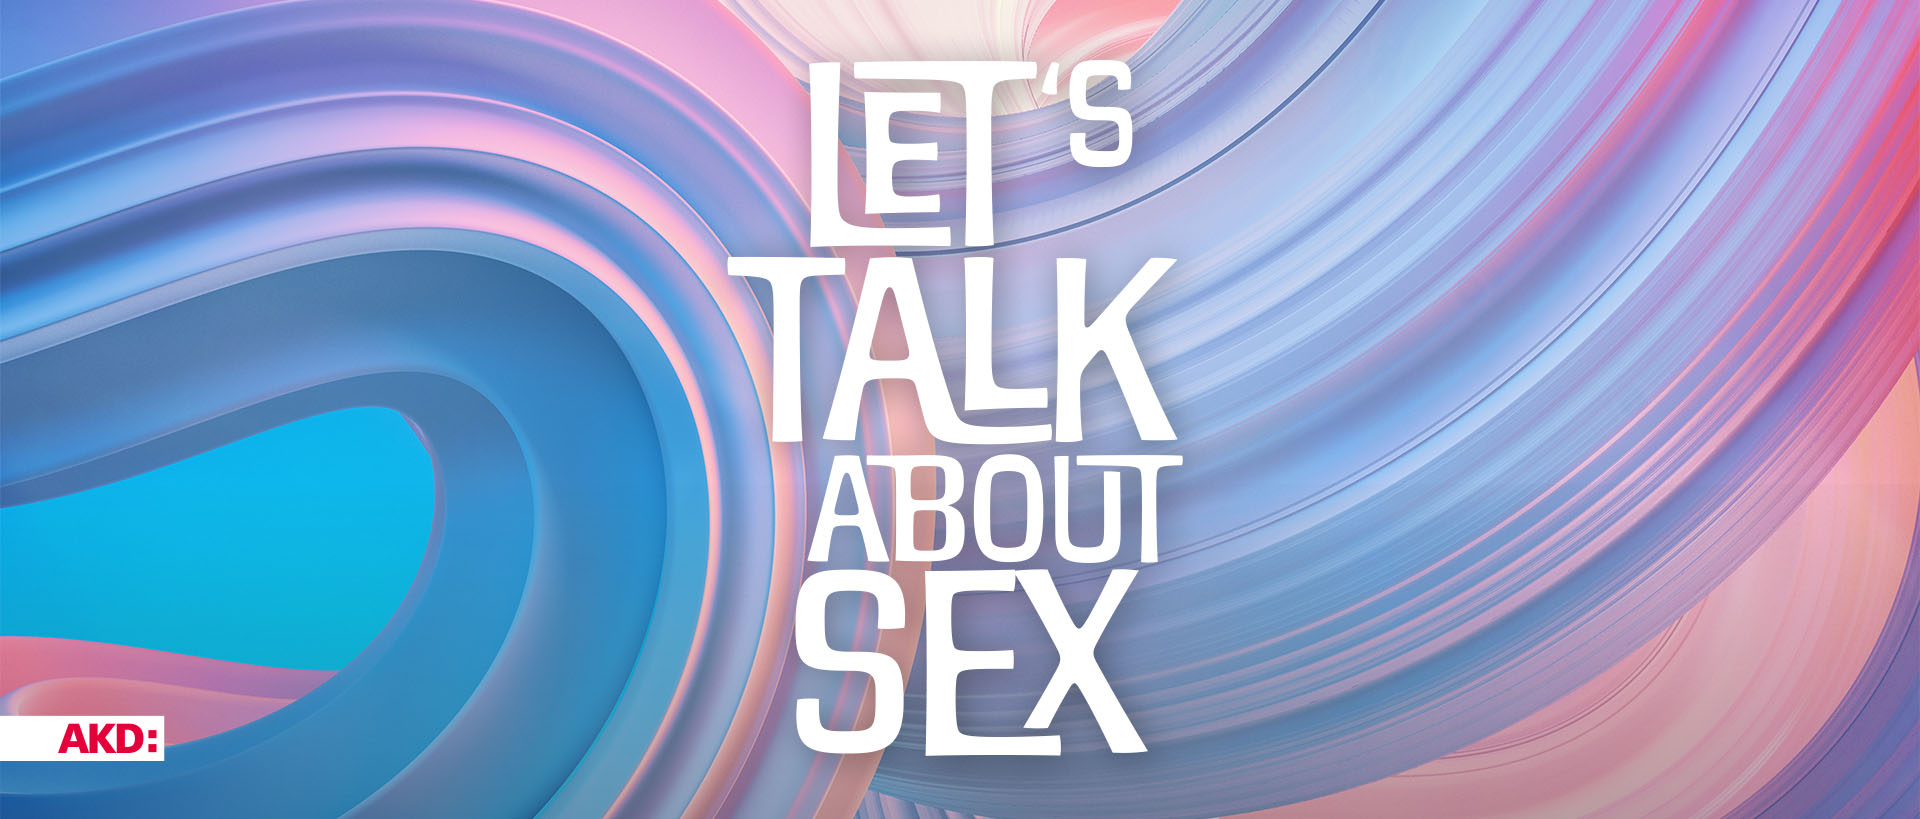 let’s talk about sex